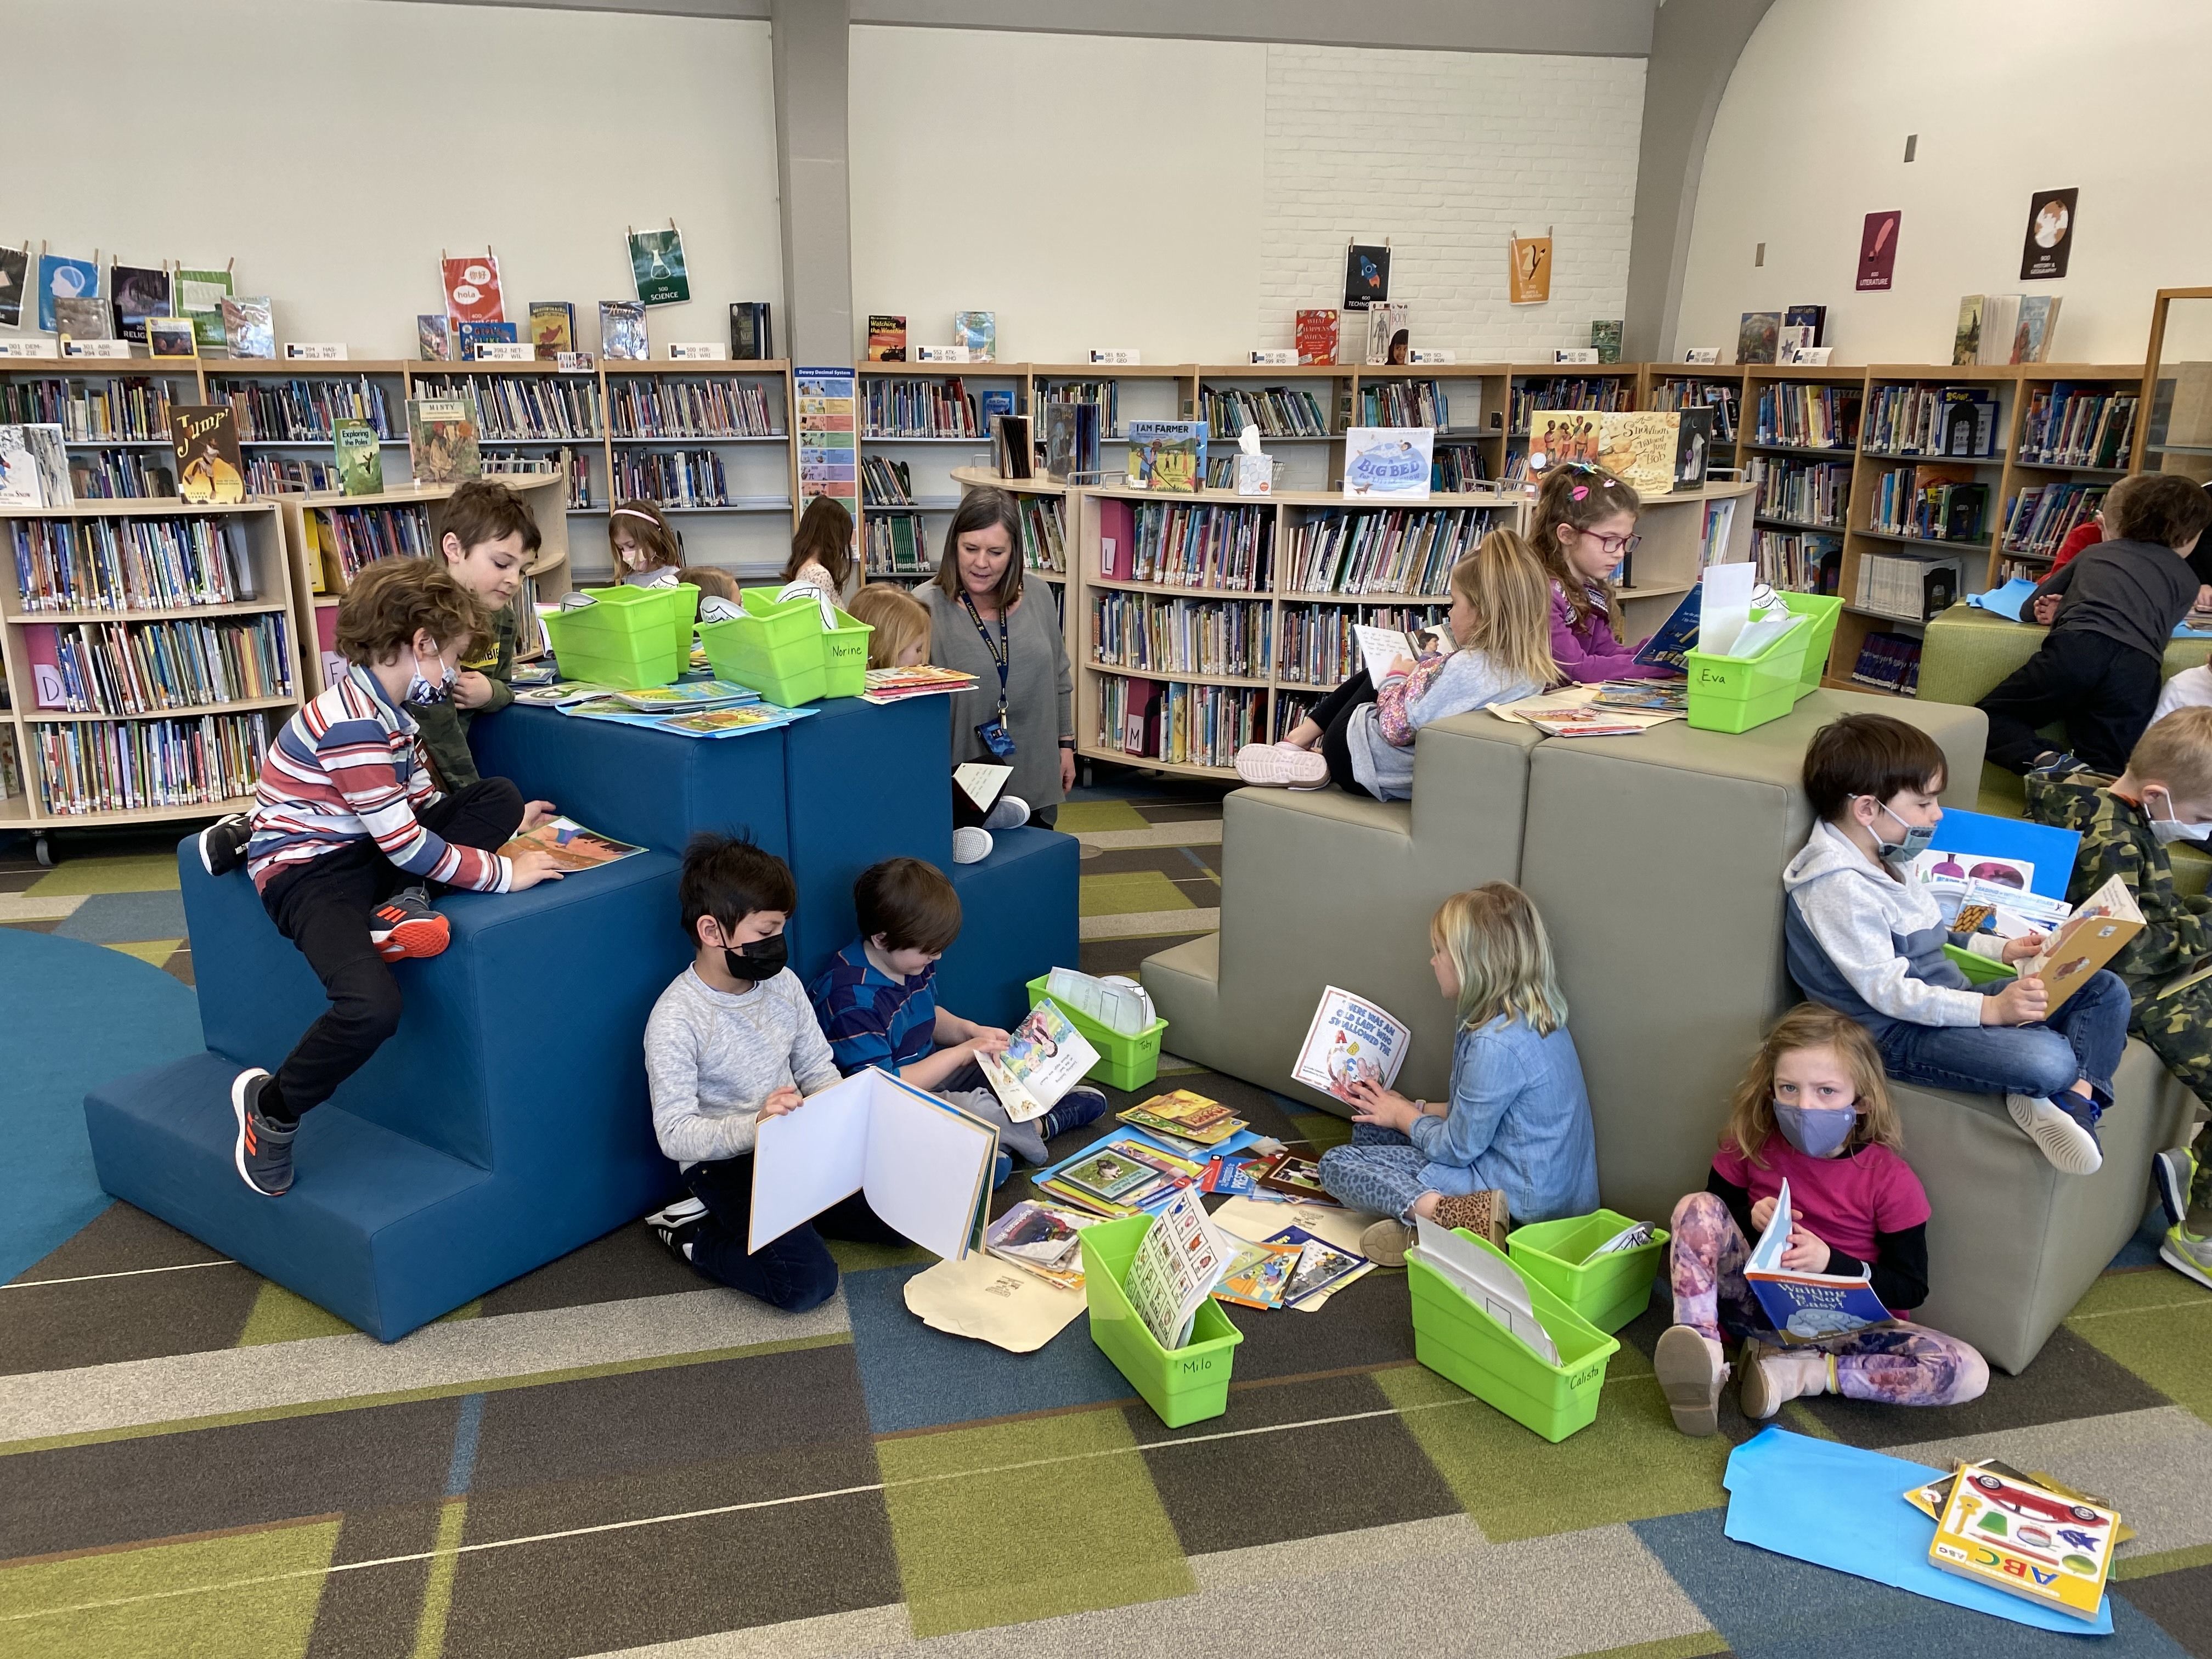 Foundation Grant Provides "Pure Magic" for Kindergarten Readers